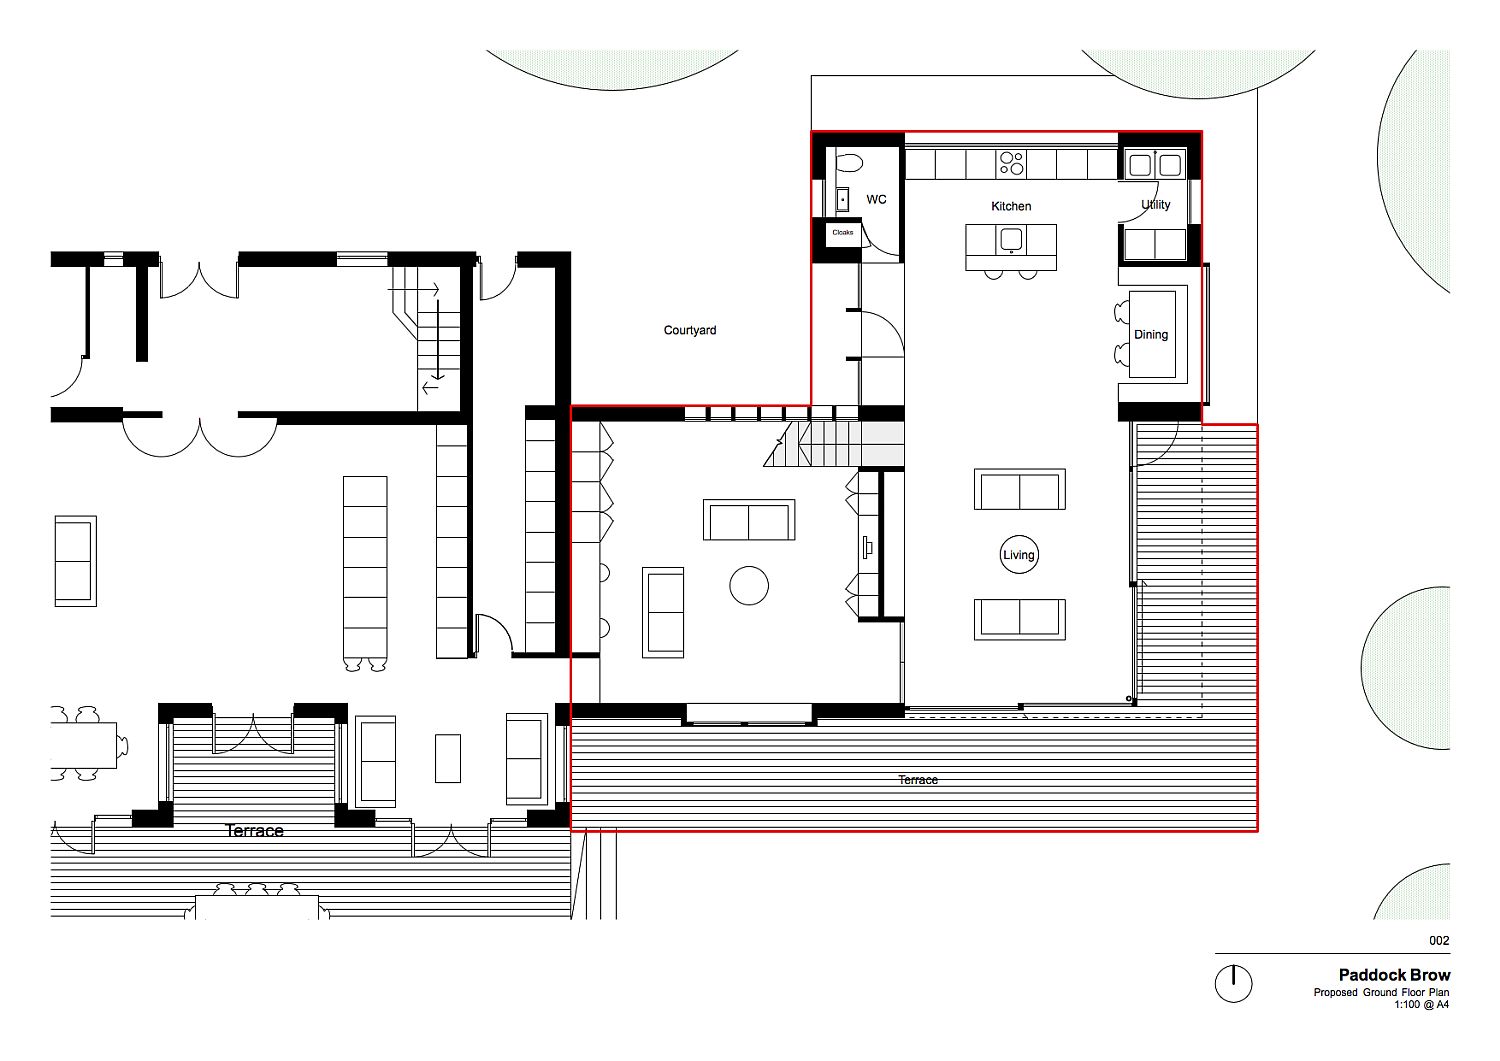 Design-plan-of-Paddock-Brow-Guesthouse-in-UK